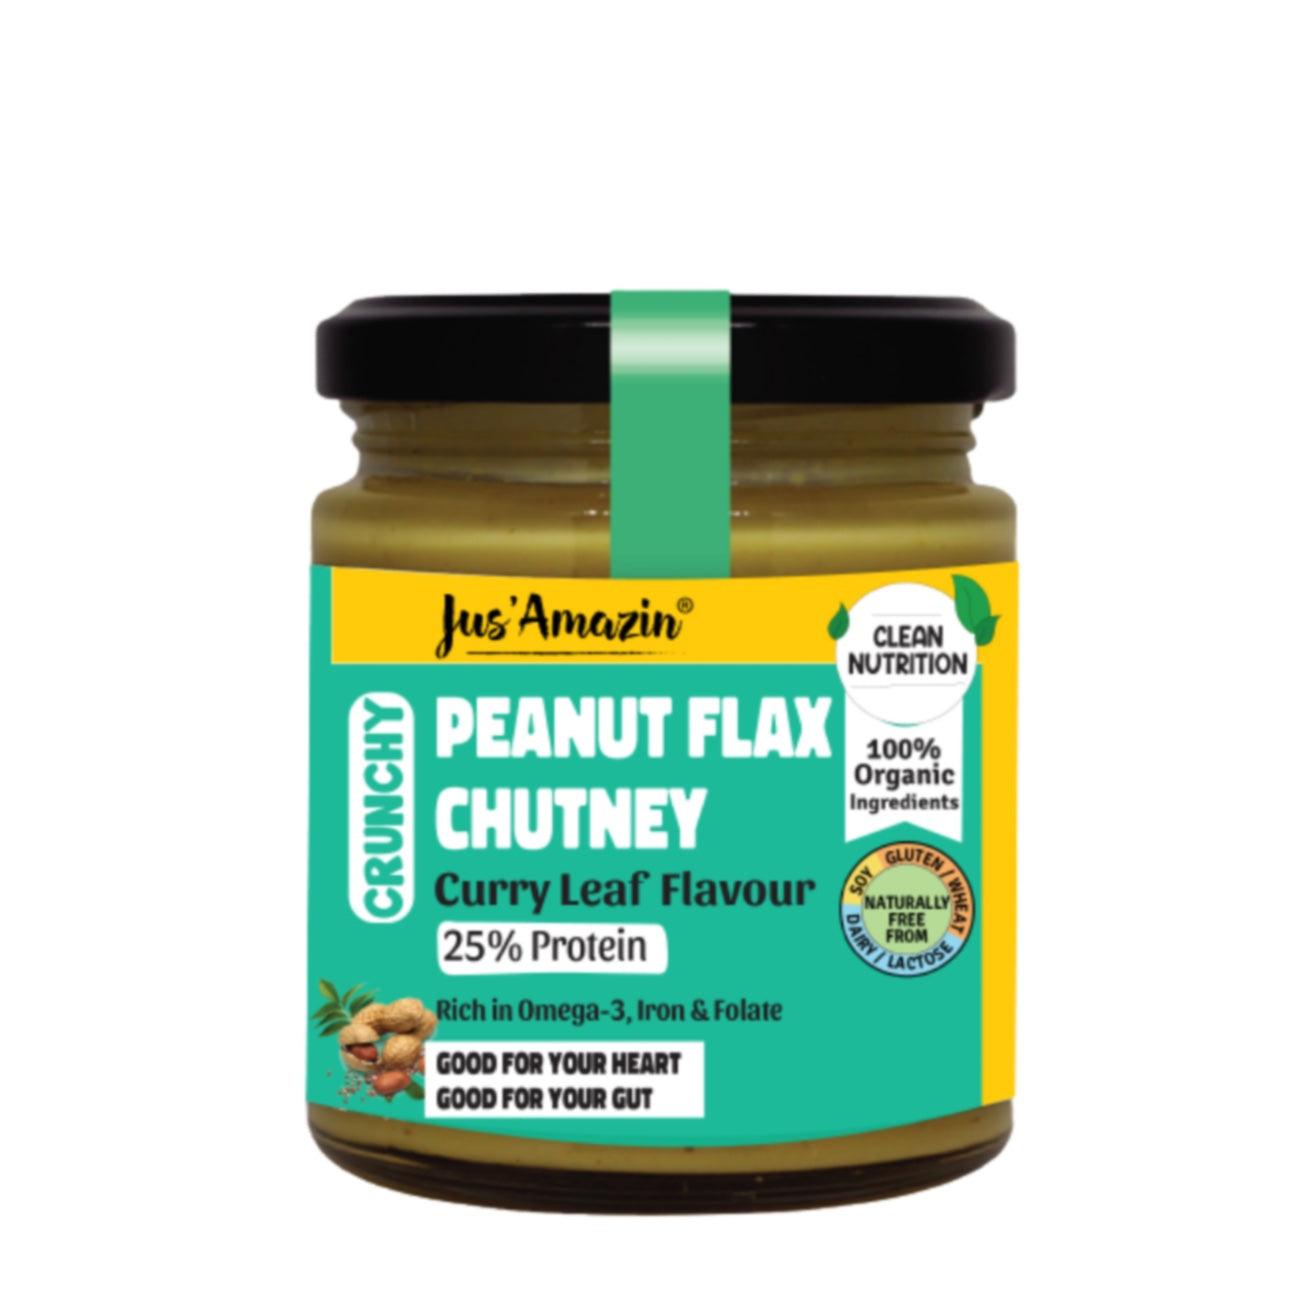 Peanut Flax chutney - Curry 'N' Cumin - Wildermart